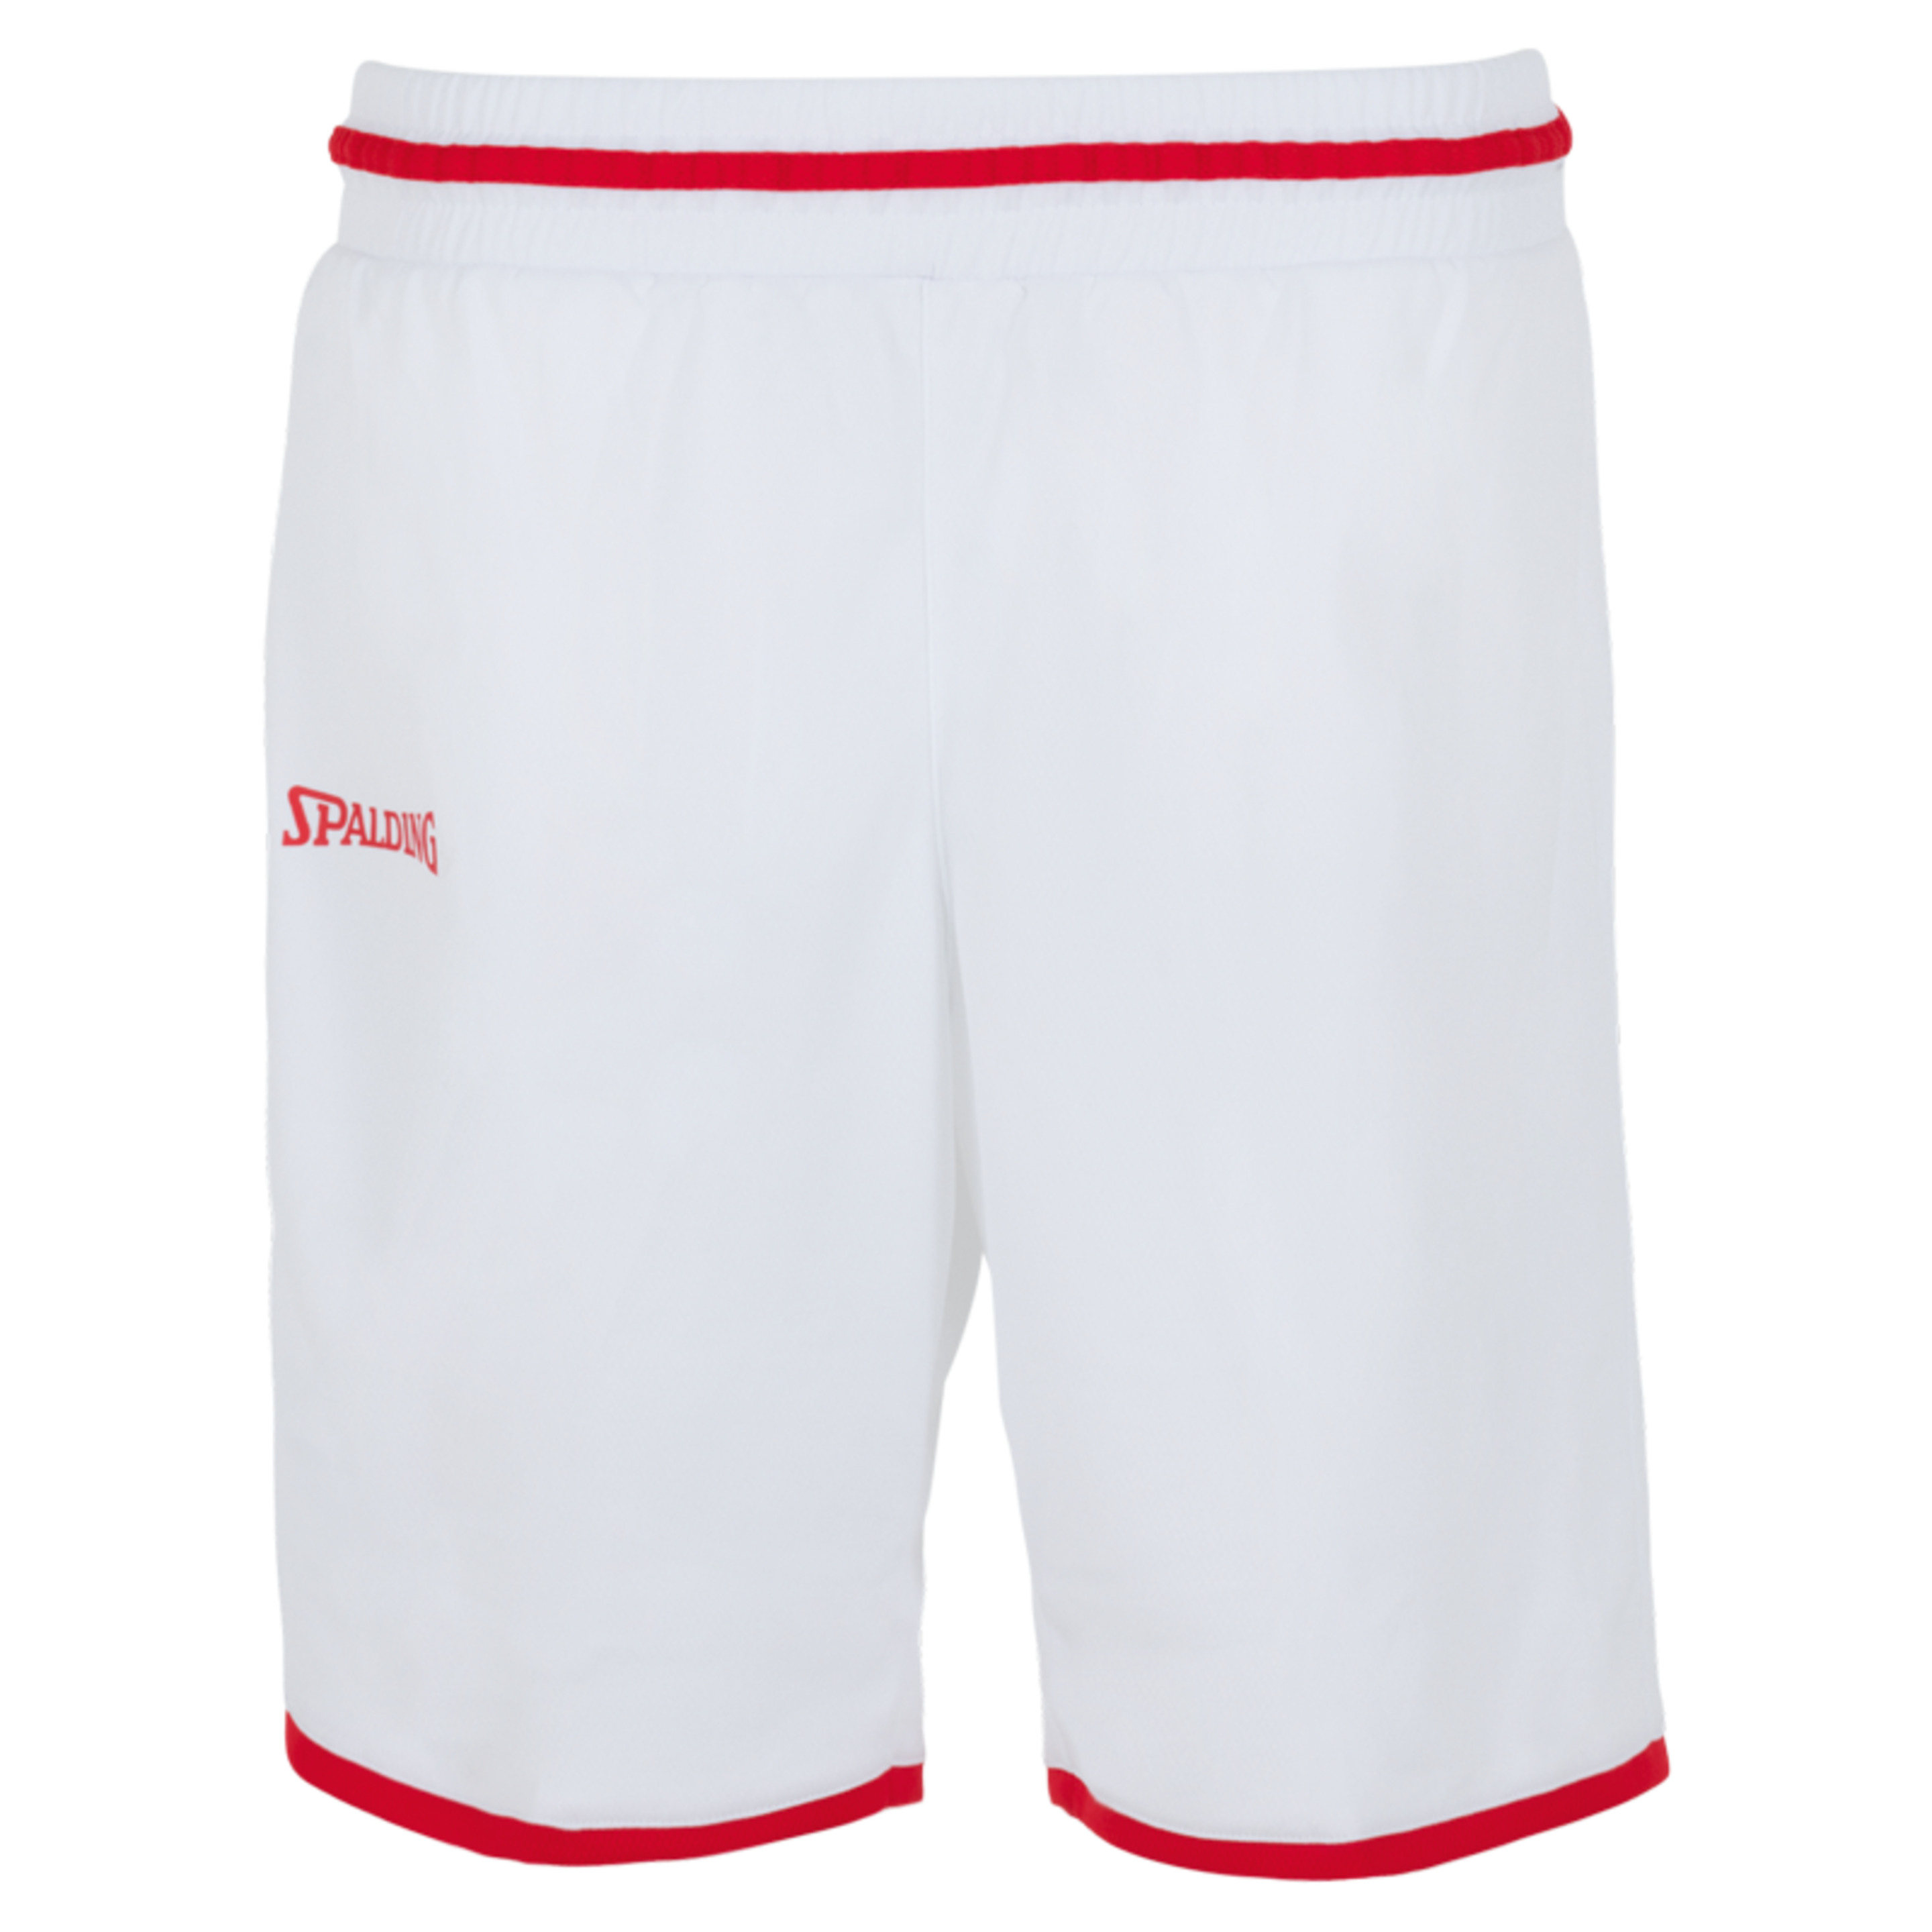 Move Shorts Women Blanco/rojo Spalding